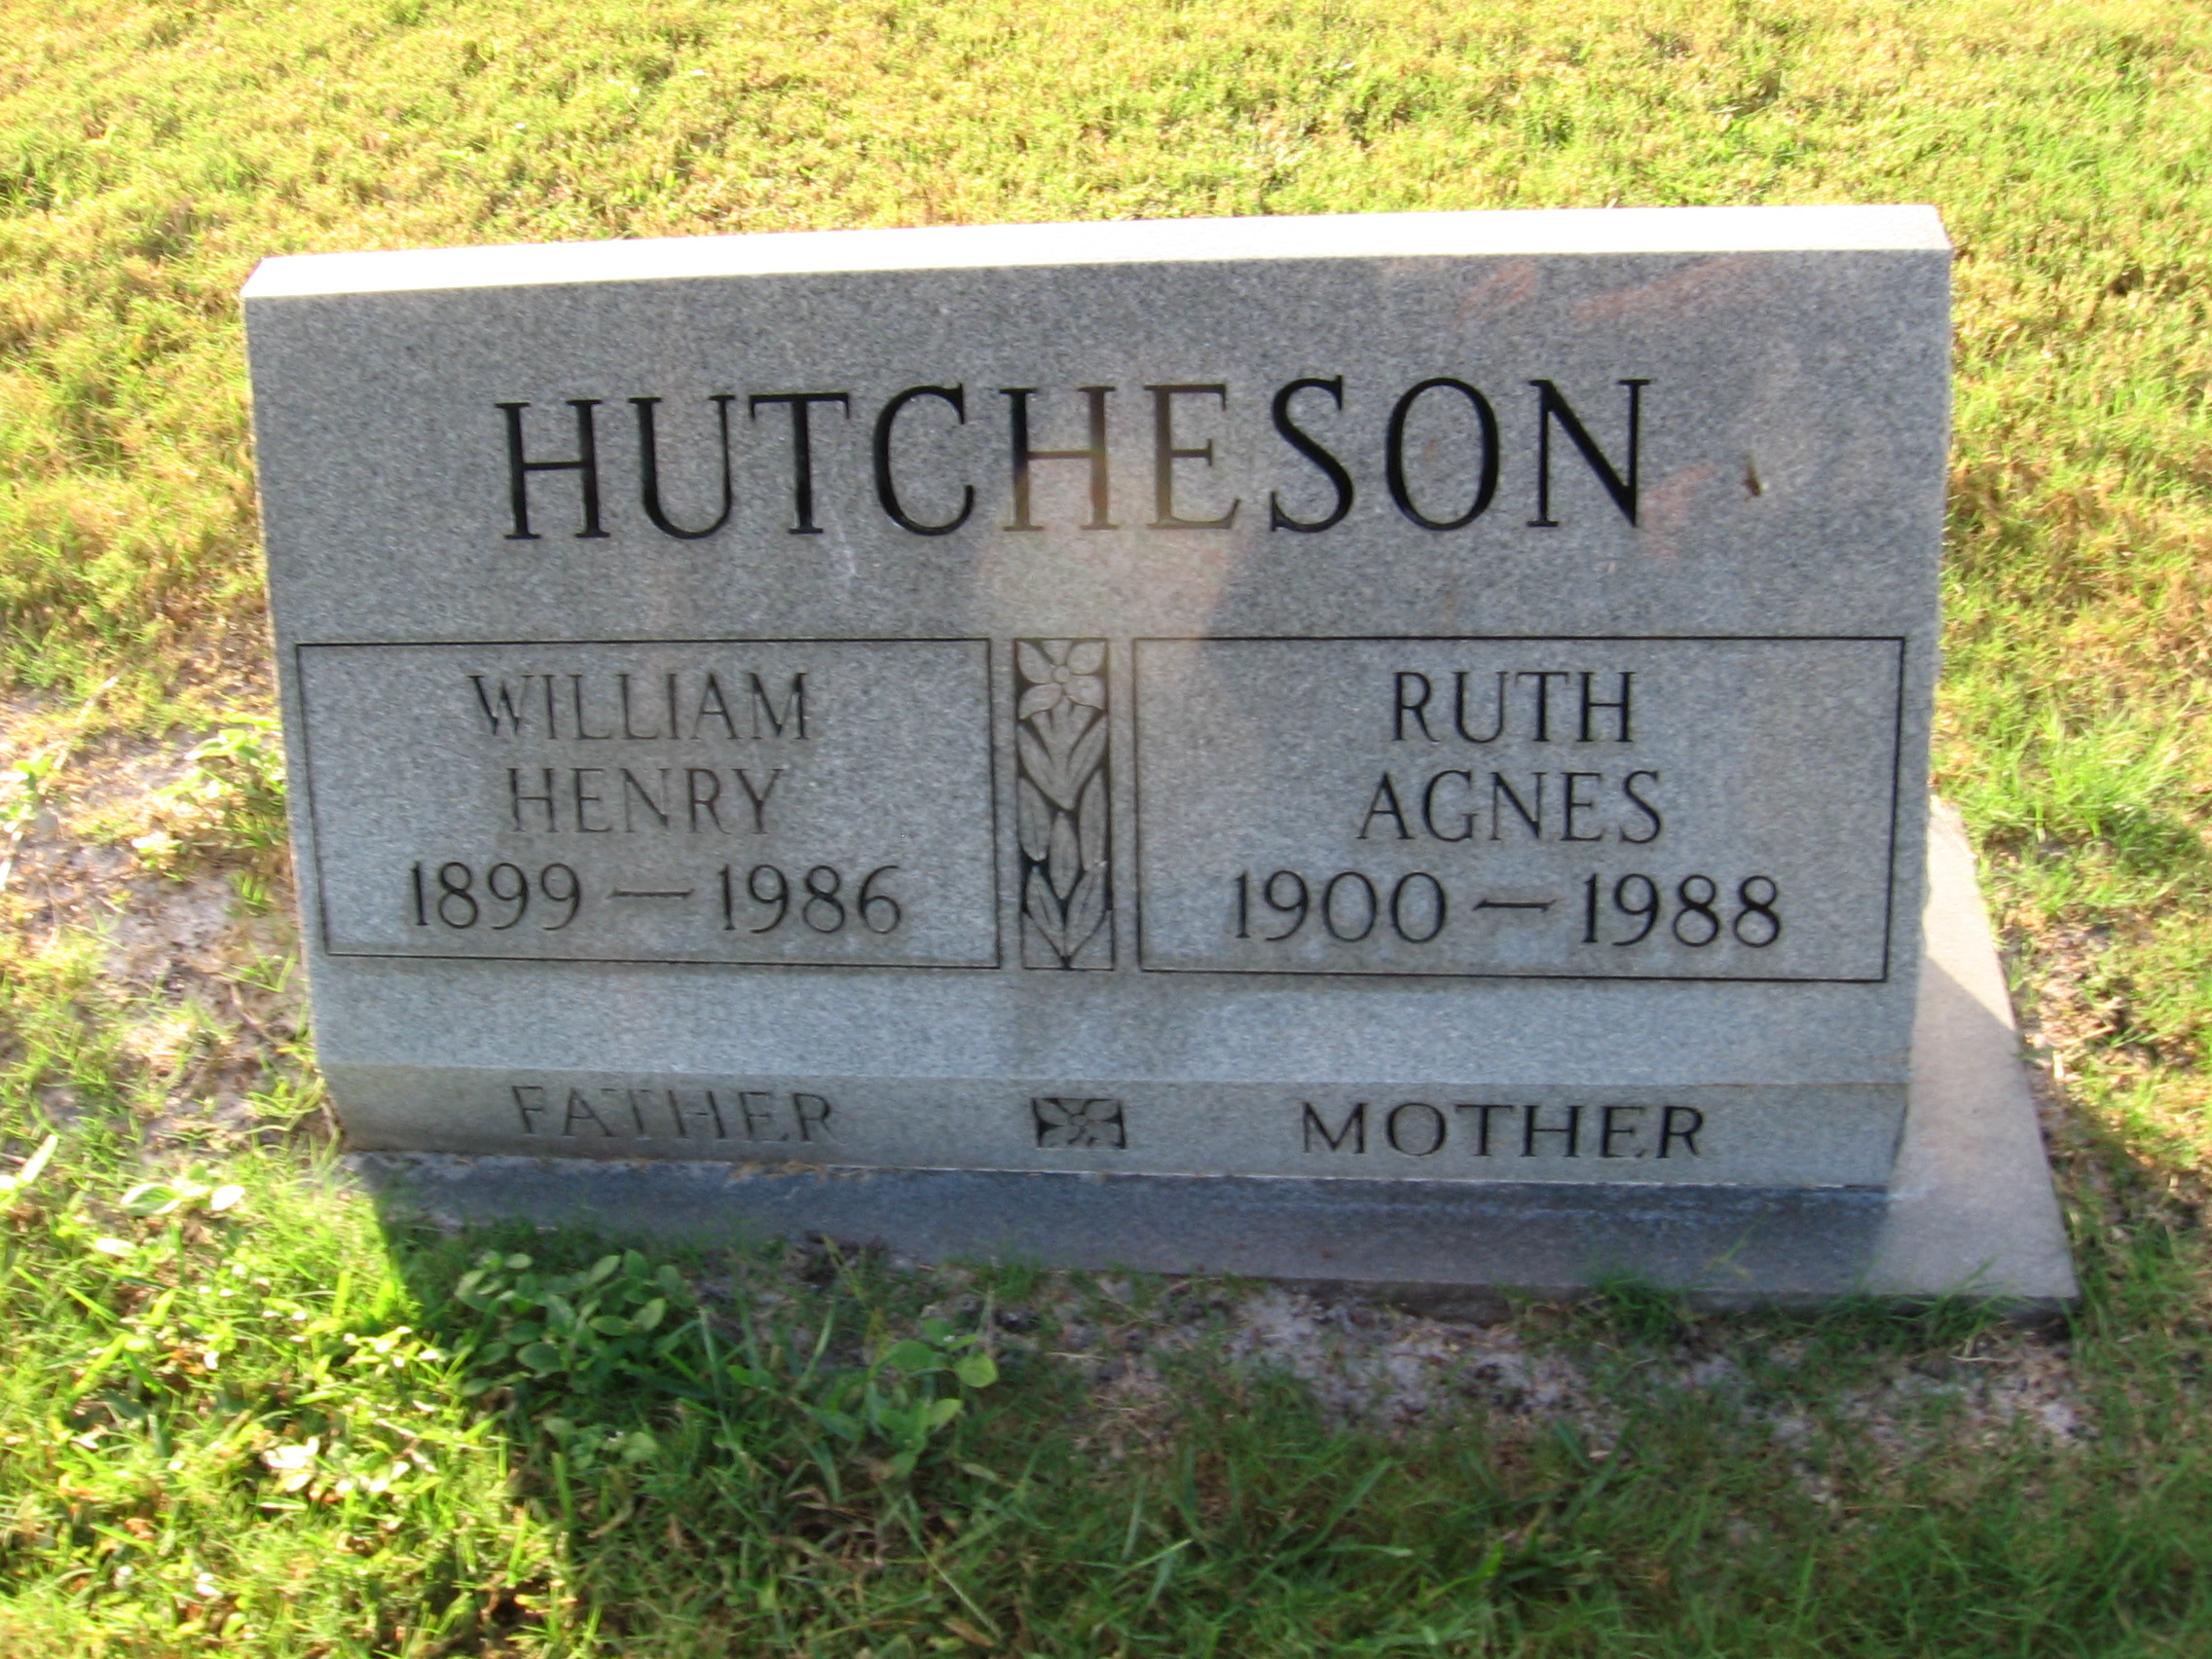 William Henry Hutcheson